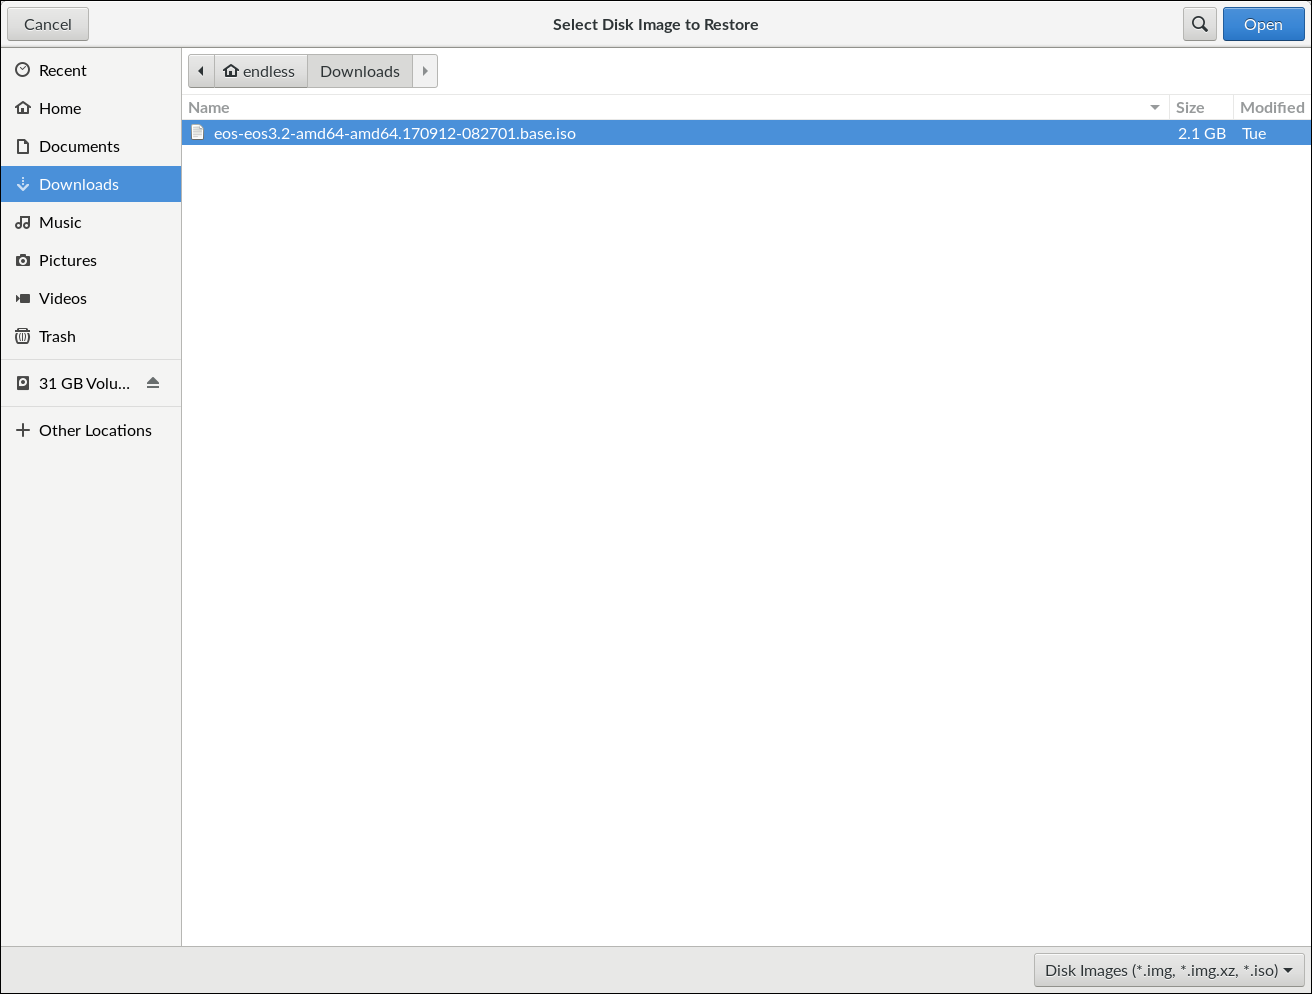 GNOME Disks - Restore Disk Image - select image file